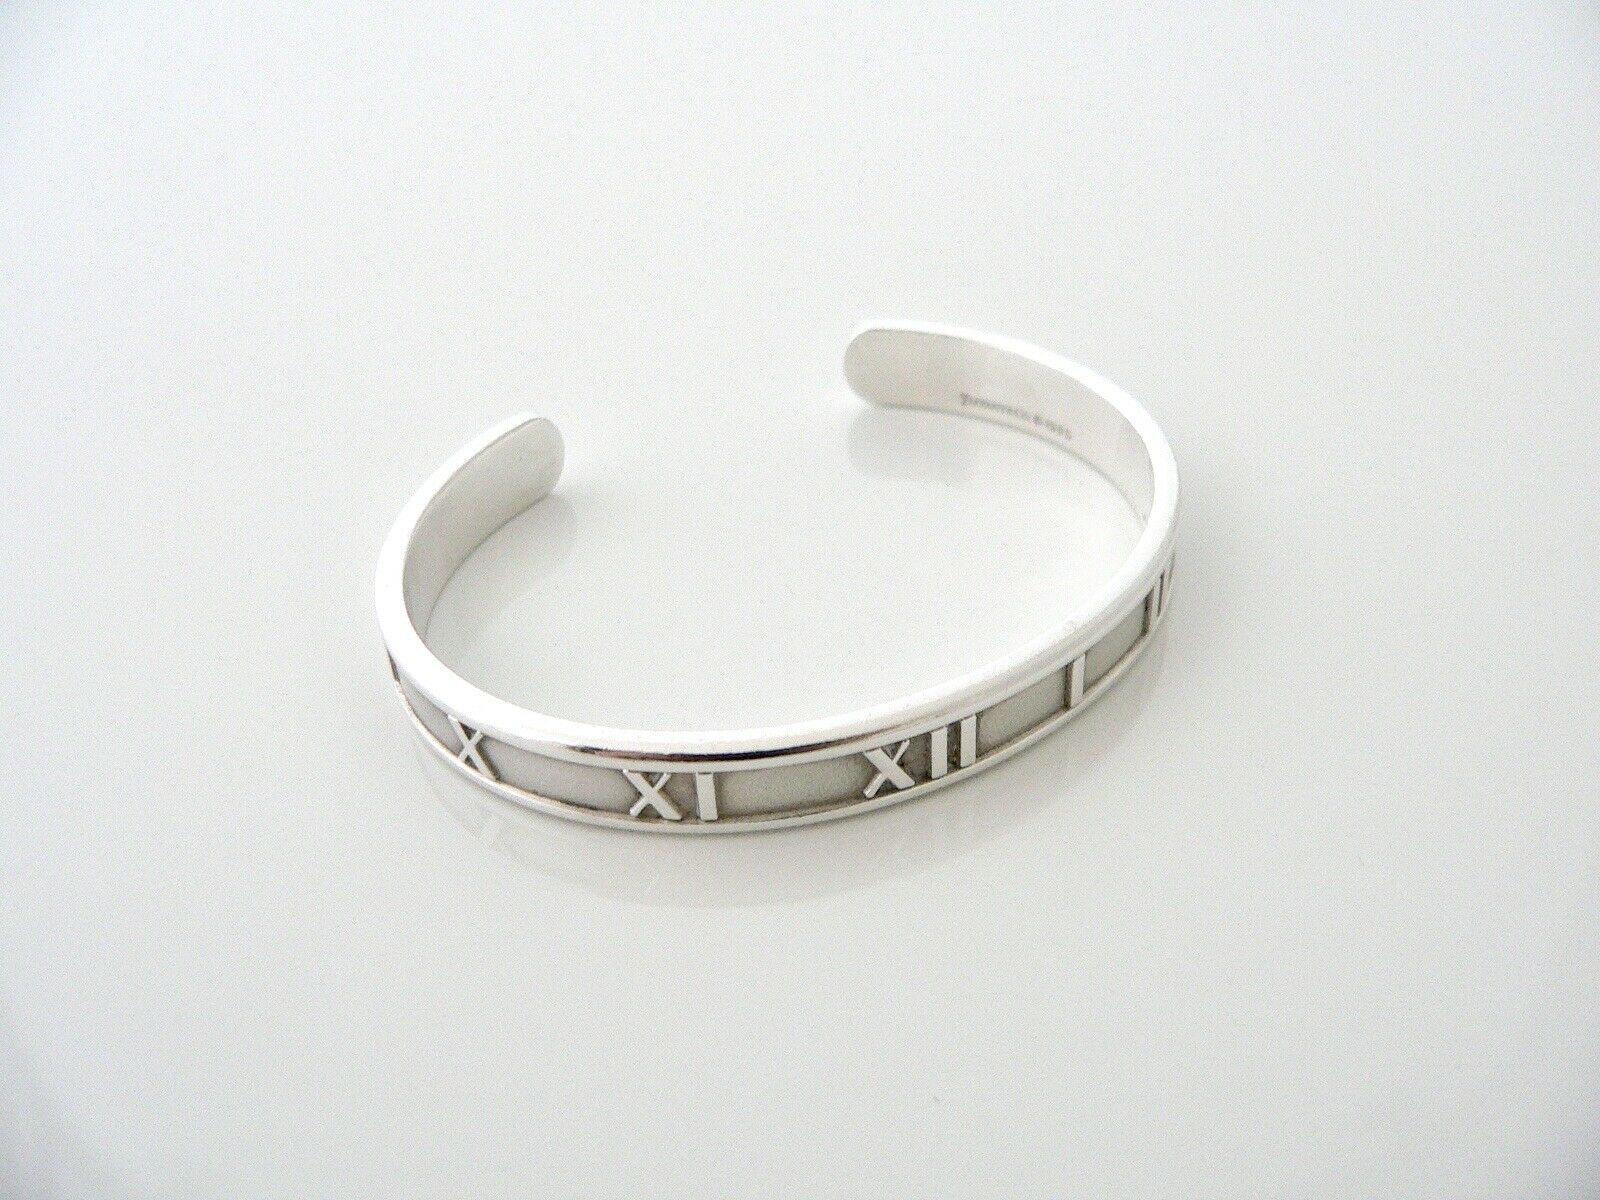 Tiffany & Co Silver Atlas Roman Numeral Cuff Bracelet Bangle Gift Love Statement